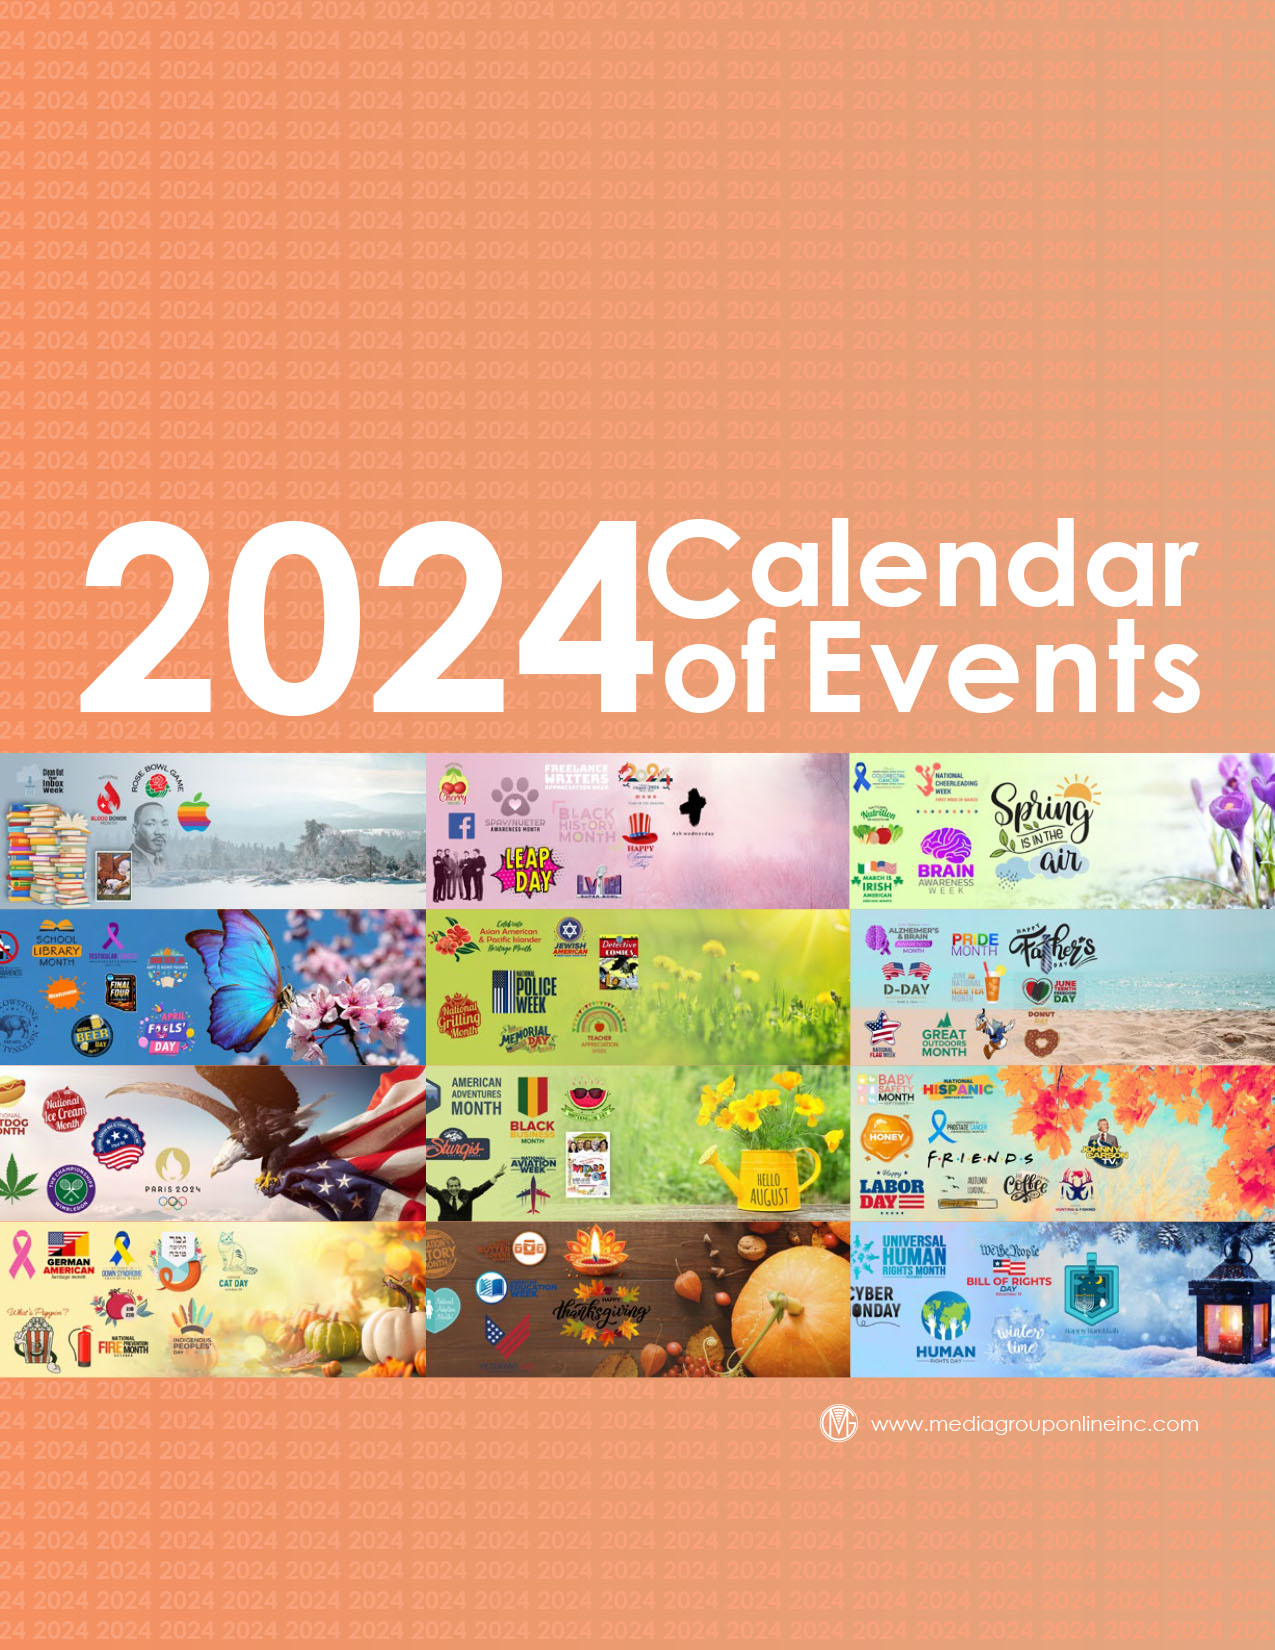 2024 Calendar of Events Media Group Online